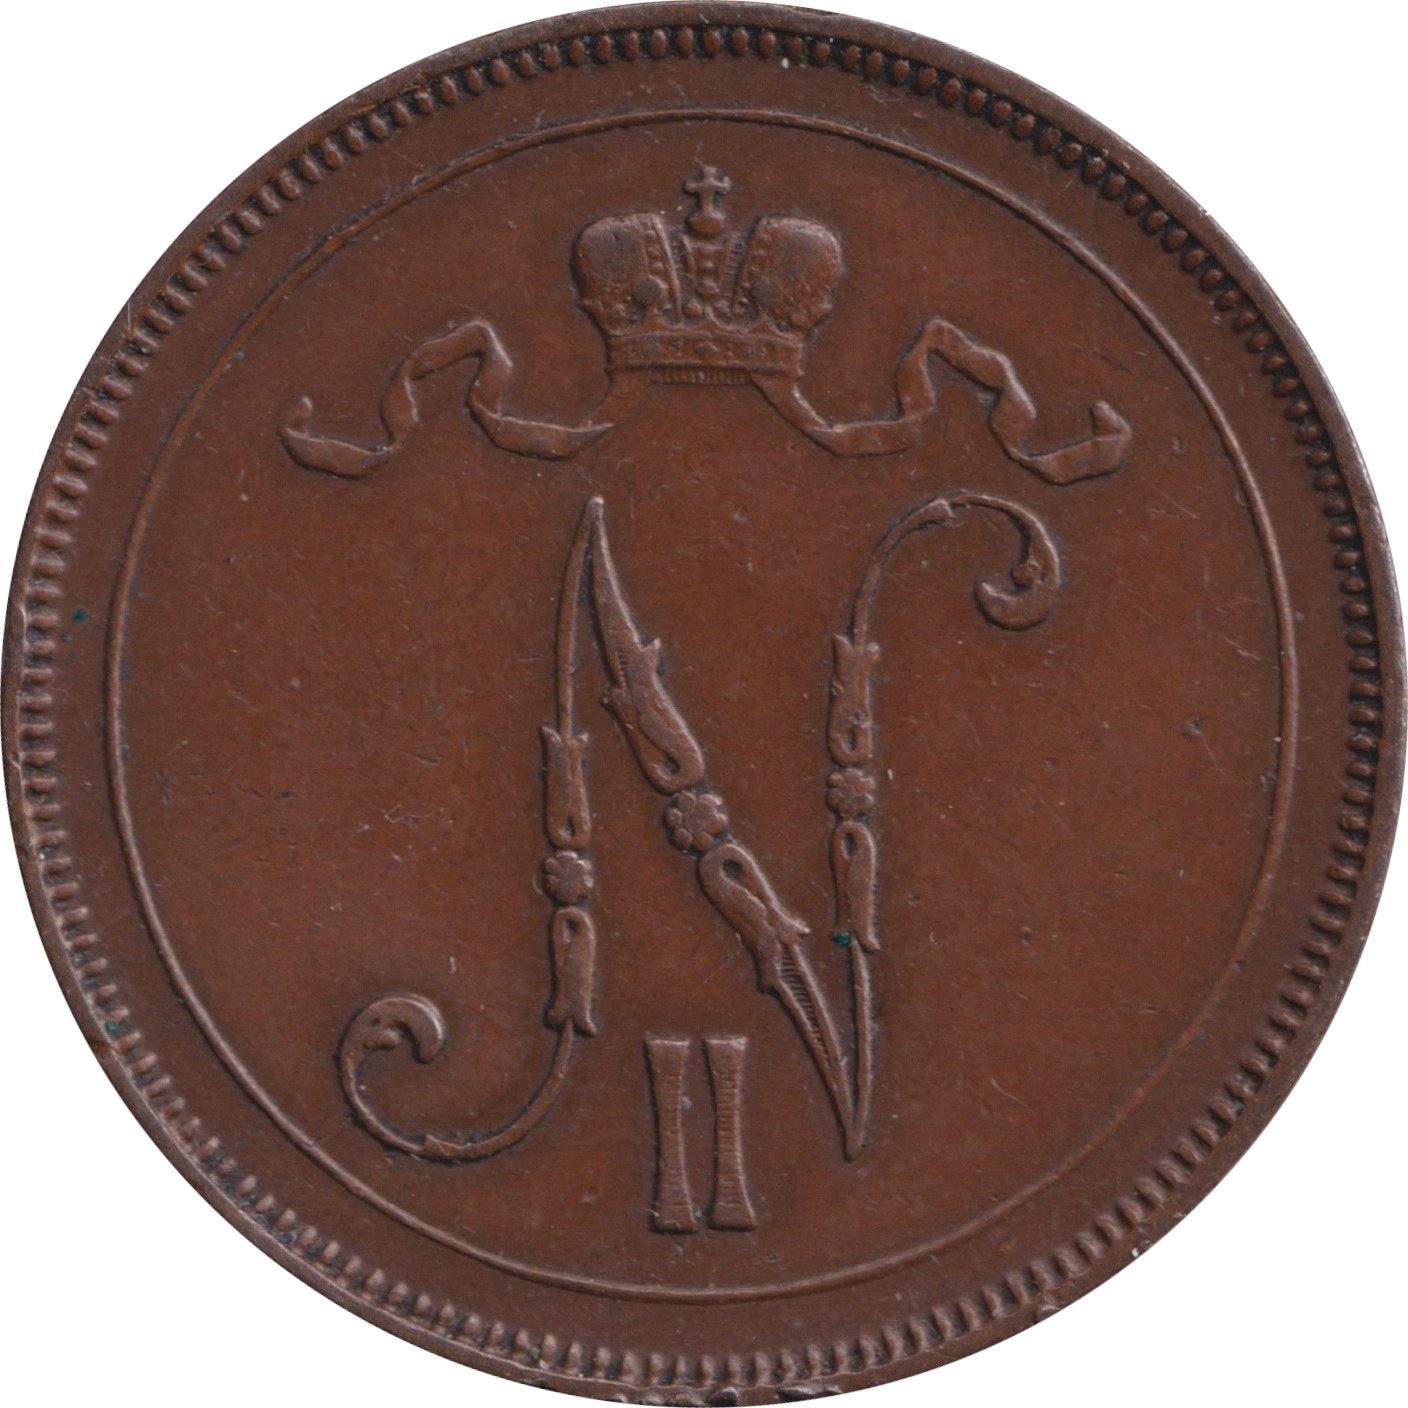 10 pennia - Nicolas II - Monogramme N II